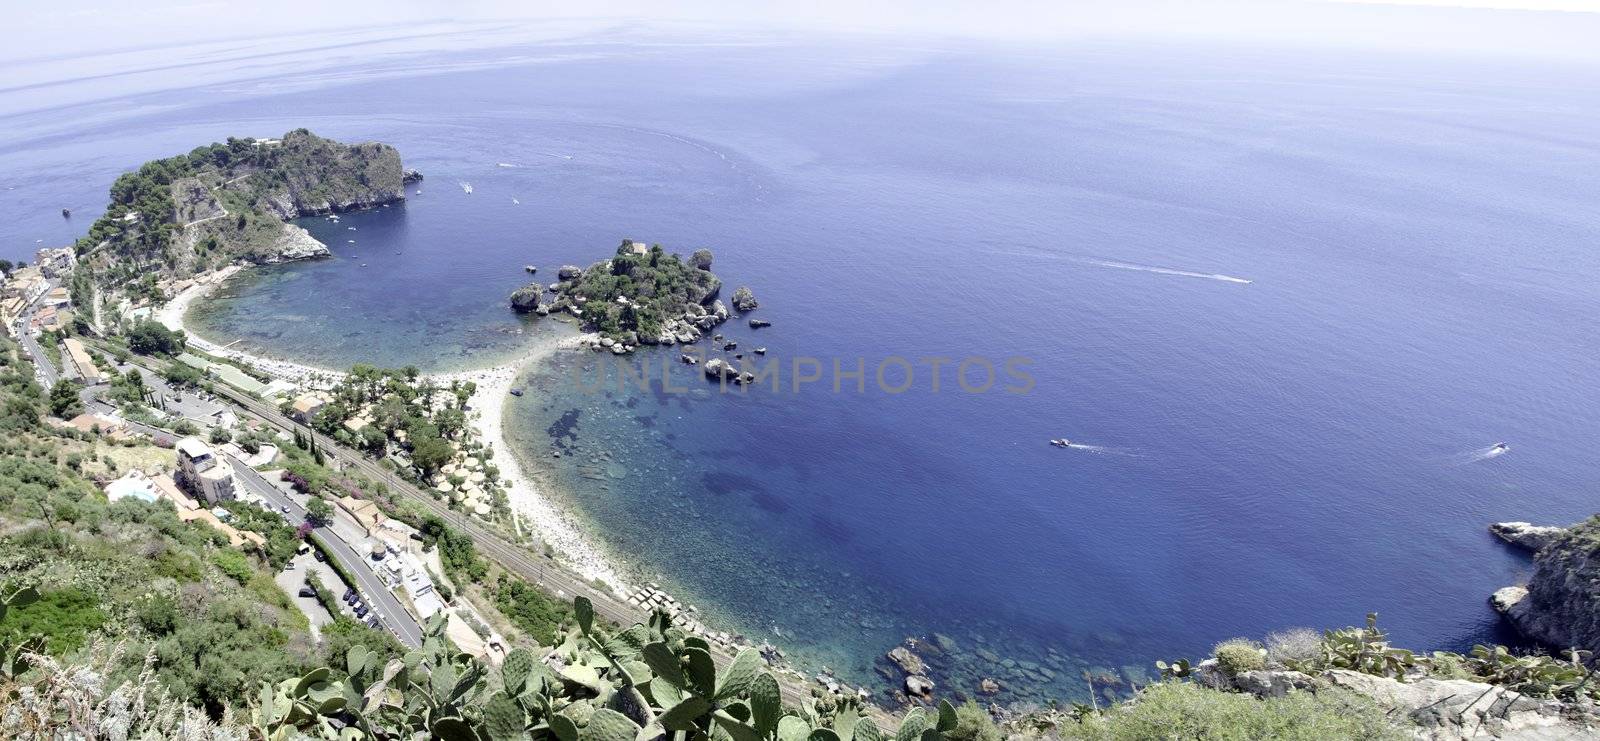 Coast of Sicily near Palermo, Italy by jovannig